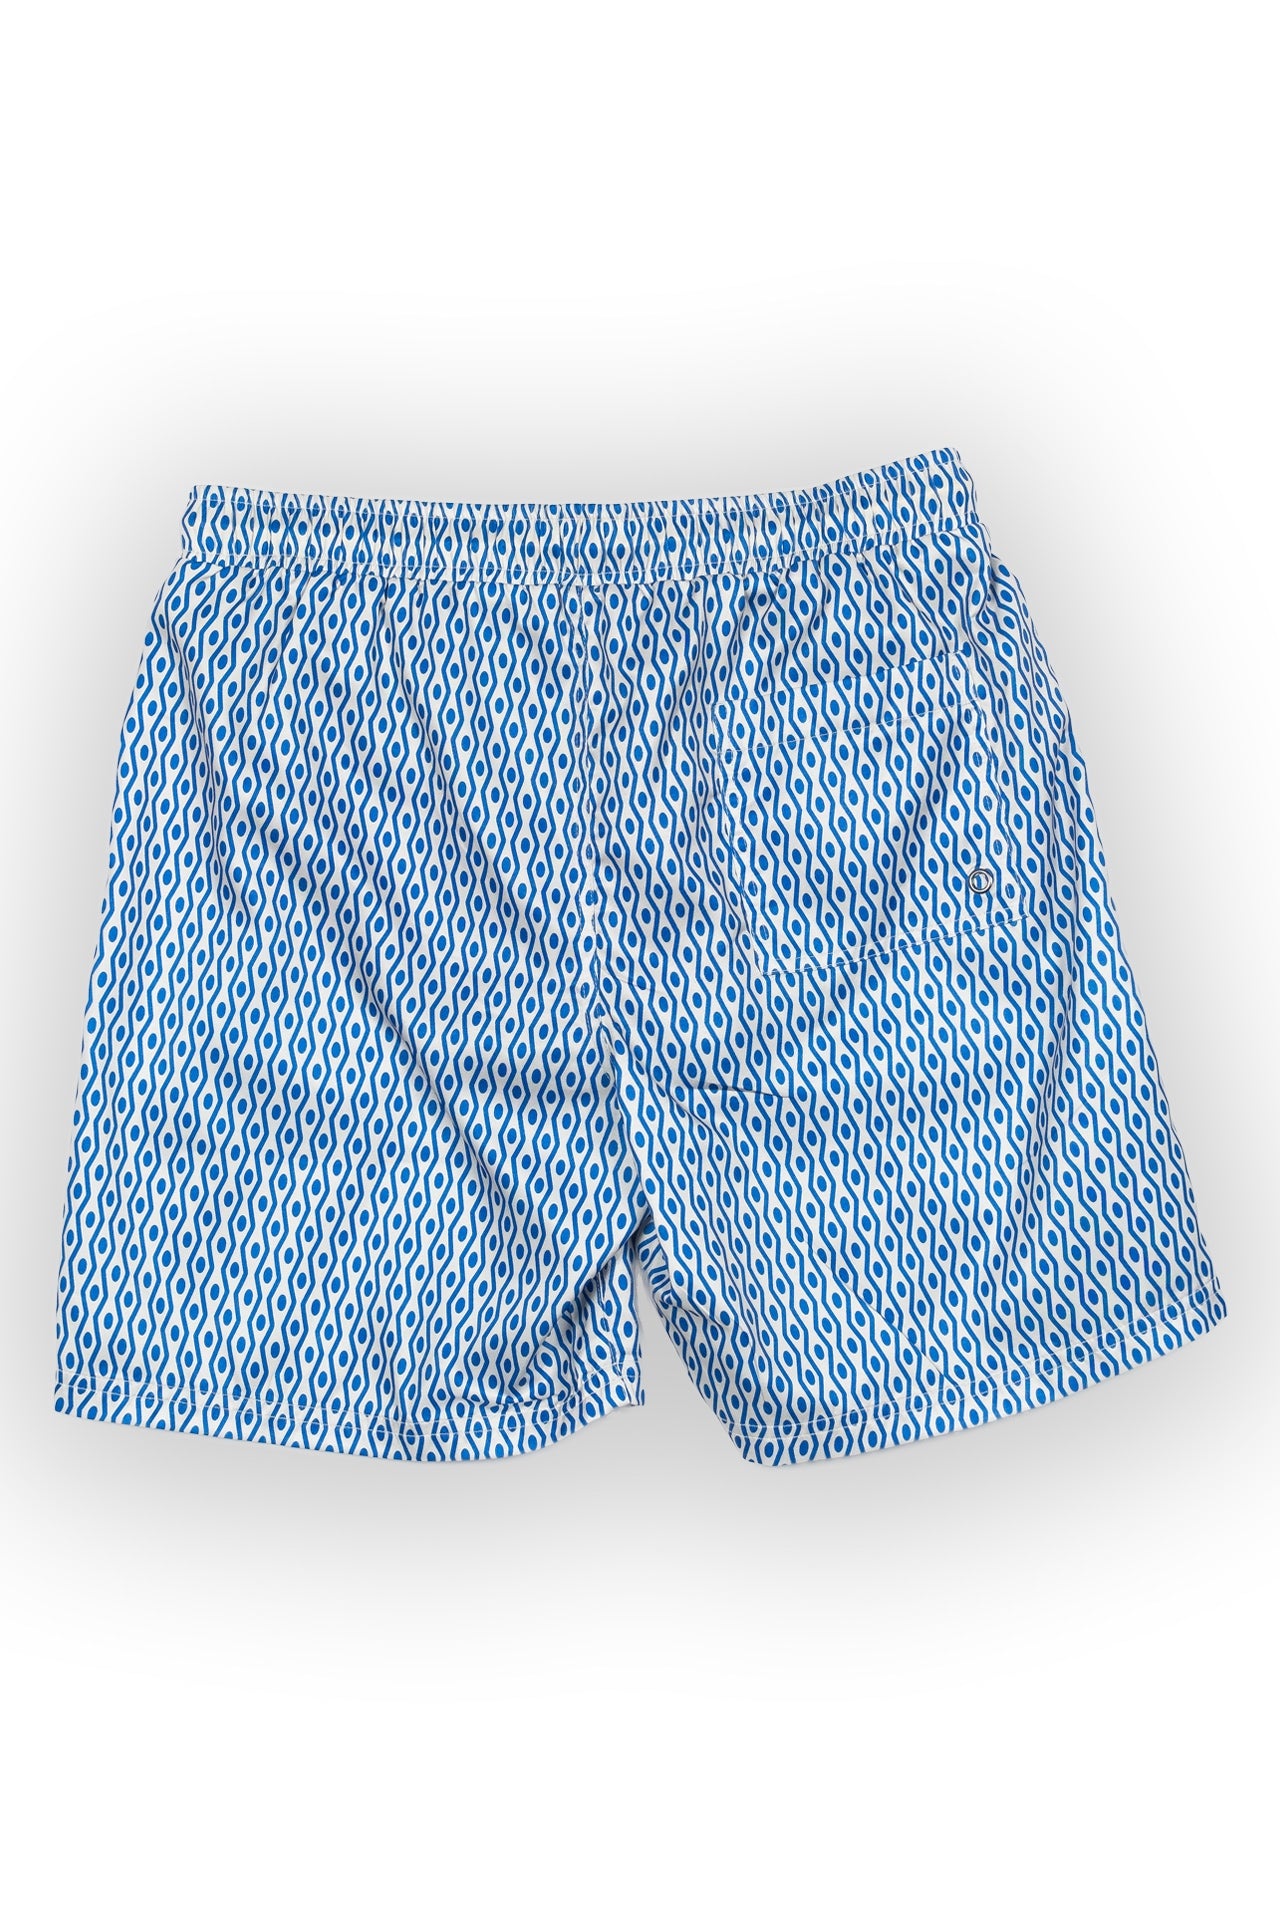 Arlo Geo Print Swim Shorts - Rupert and Buckley - Swin Shorts